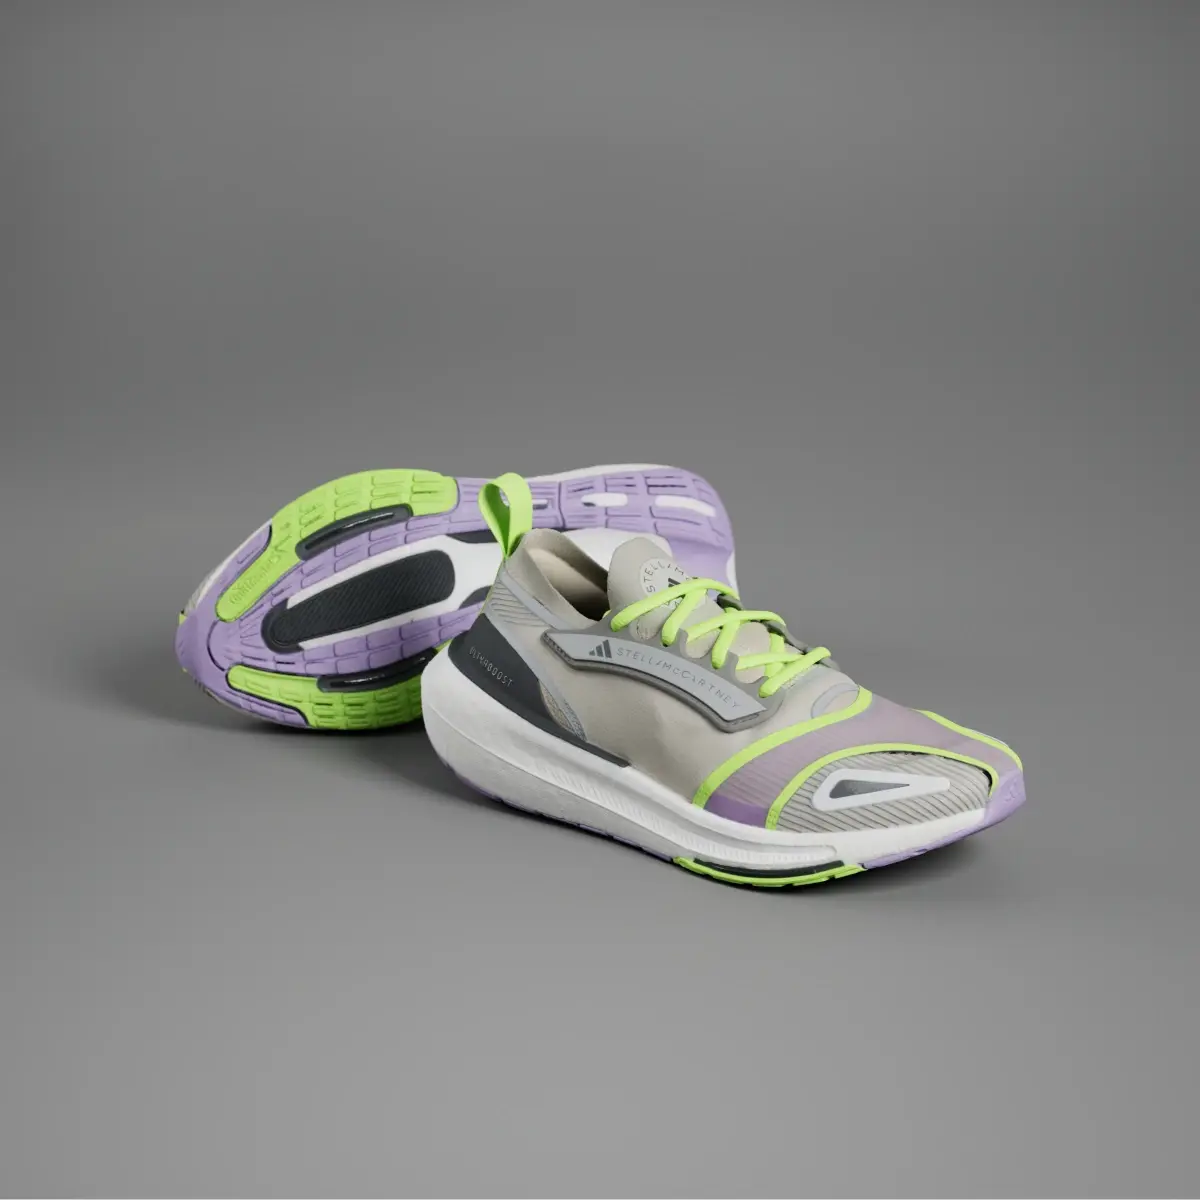 Adidas by Stella McCartney Ultraboost Light Shoes. 1